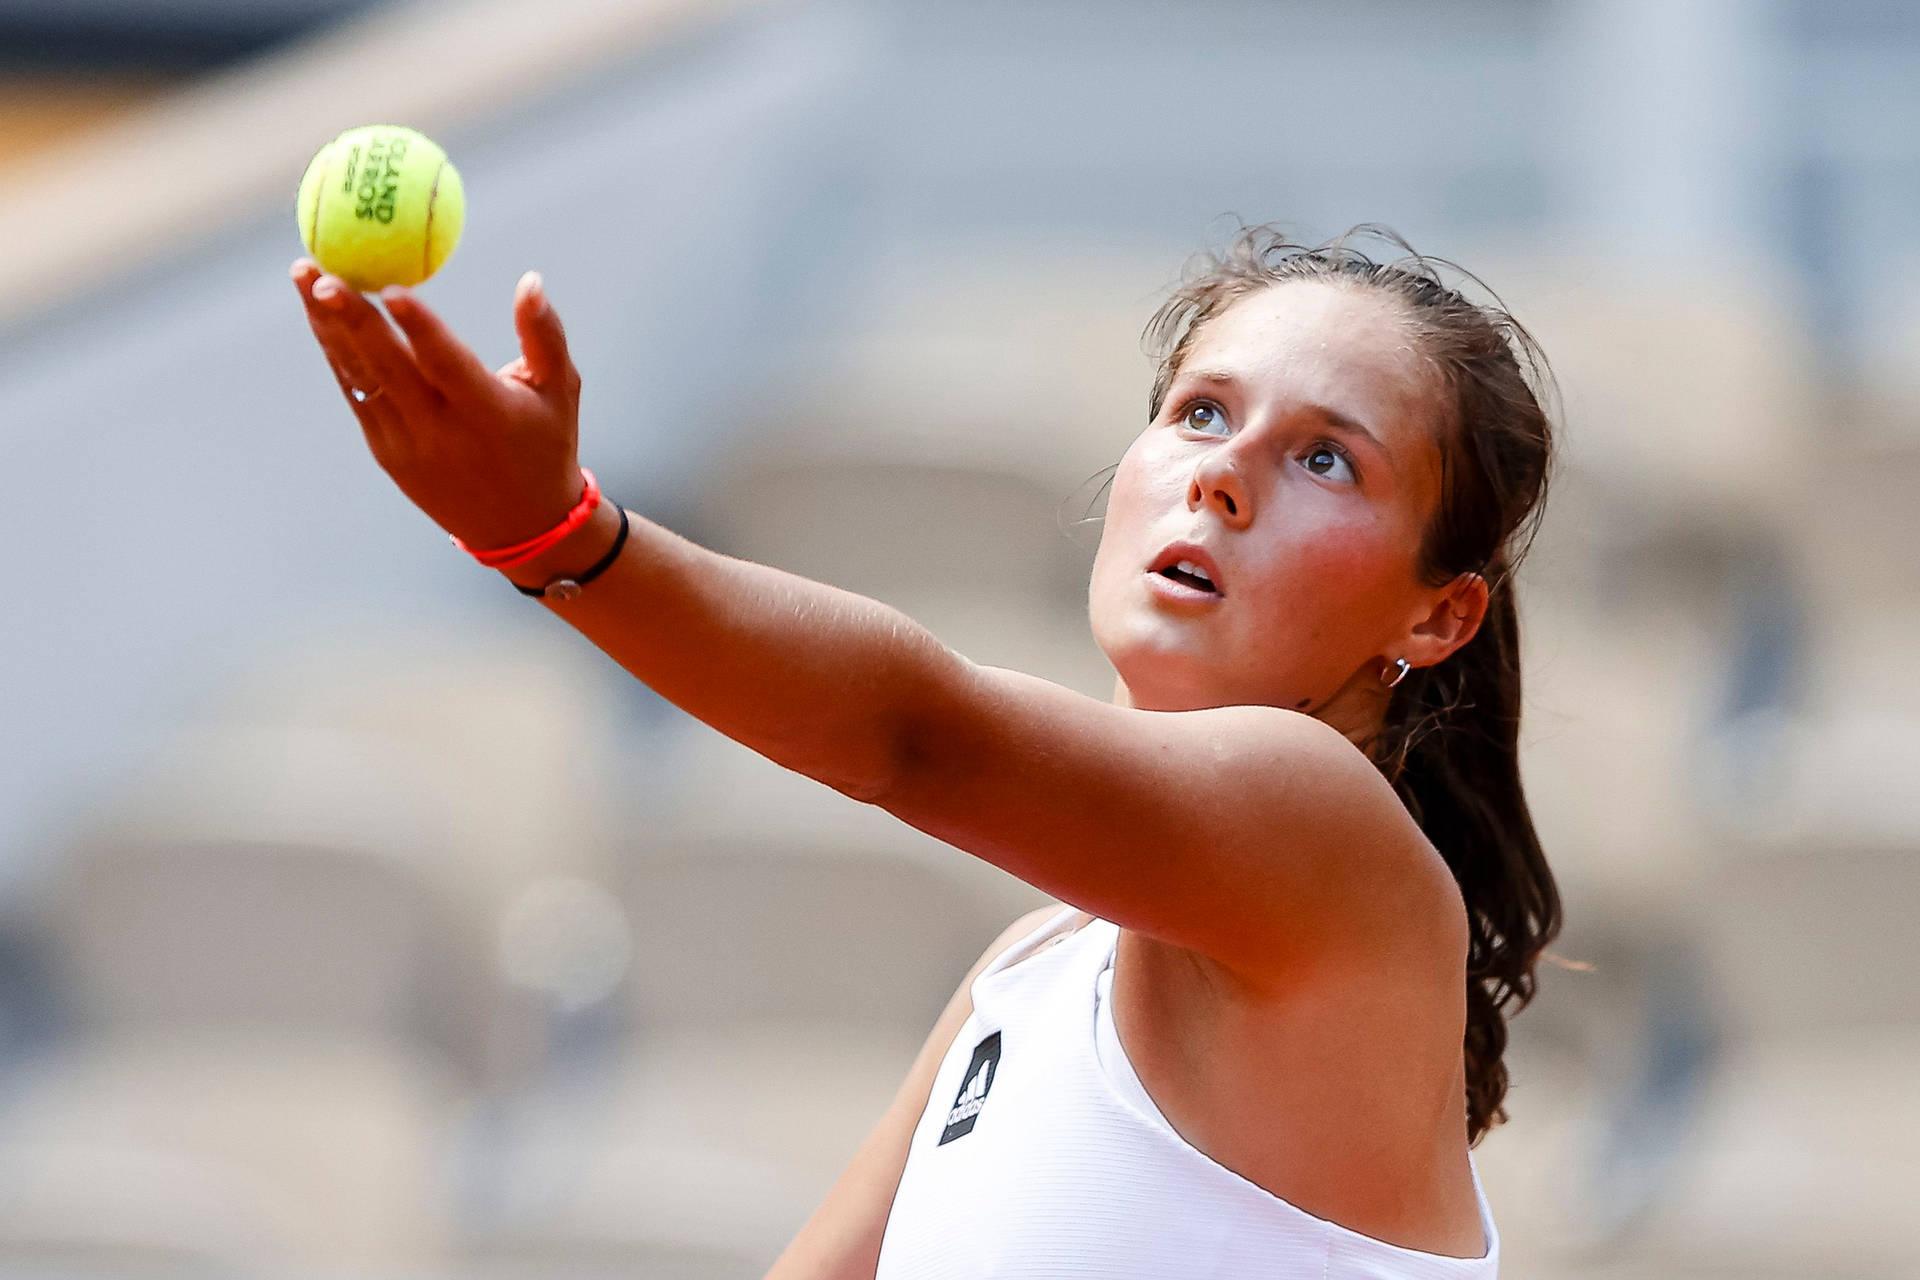 Professional Tennis Player Daria Kasatkina Prepares to Serve Wallpaper